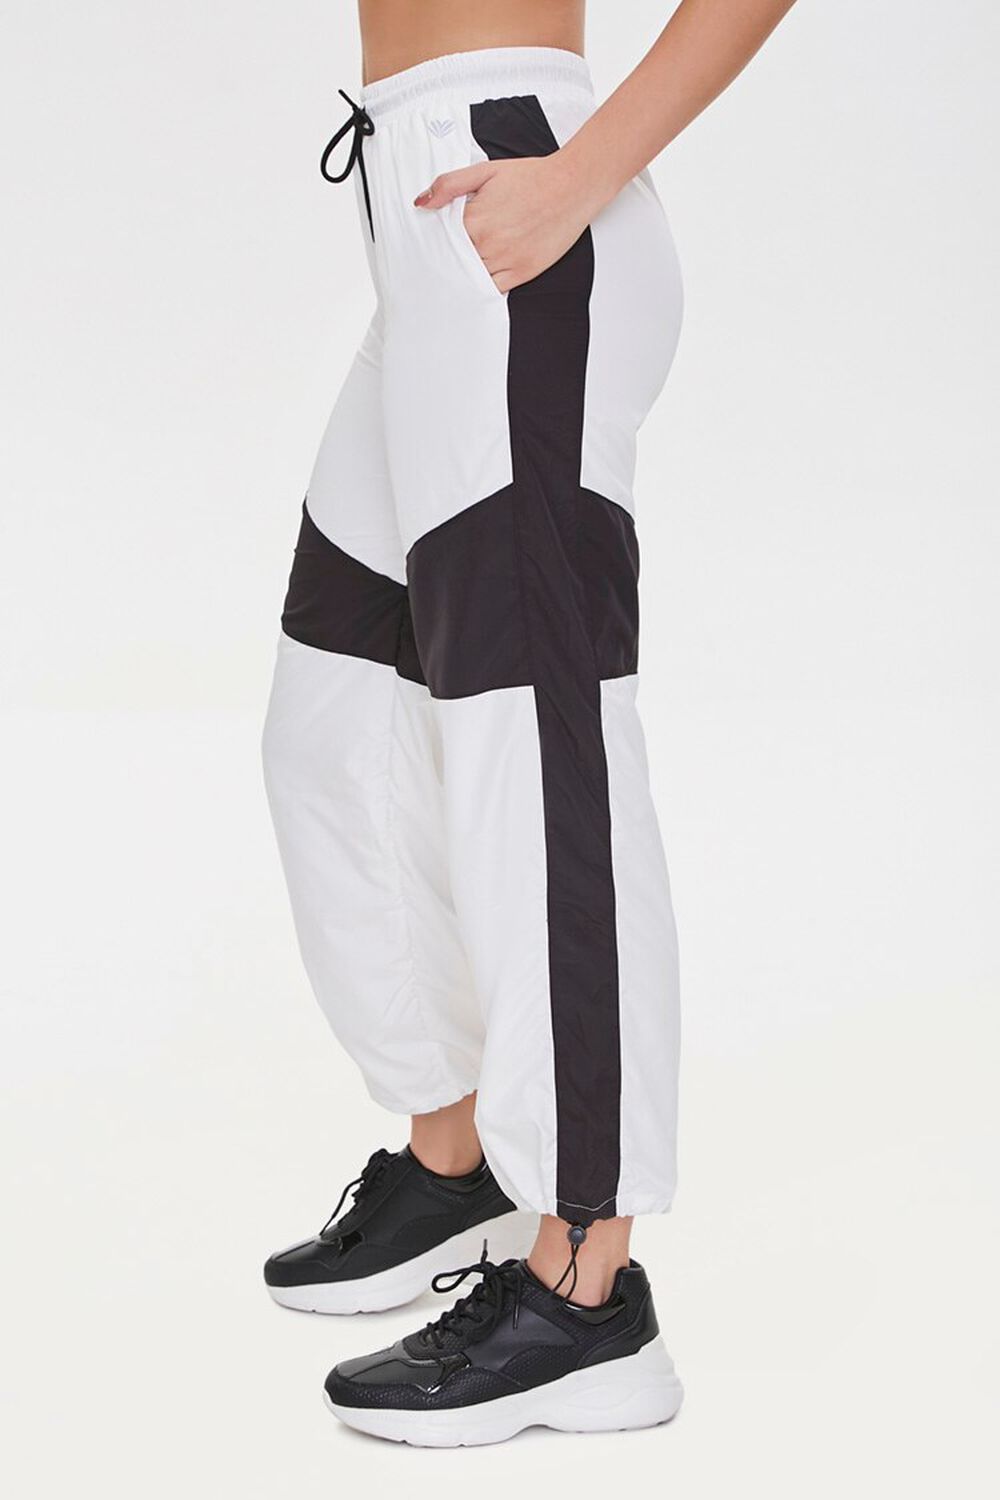 BLACK/WHITE Colorblock Windbreaker Pants, image 3